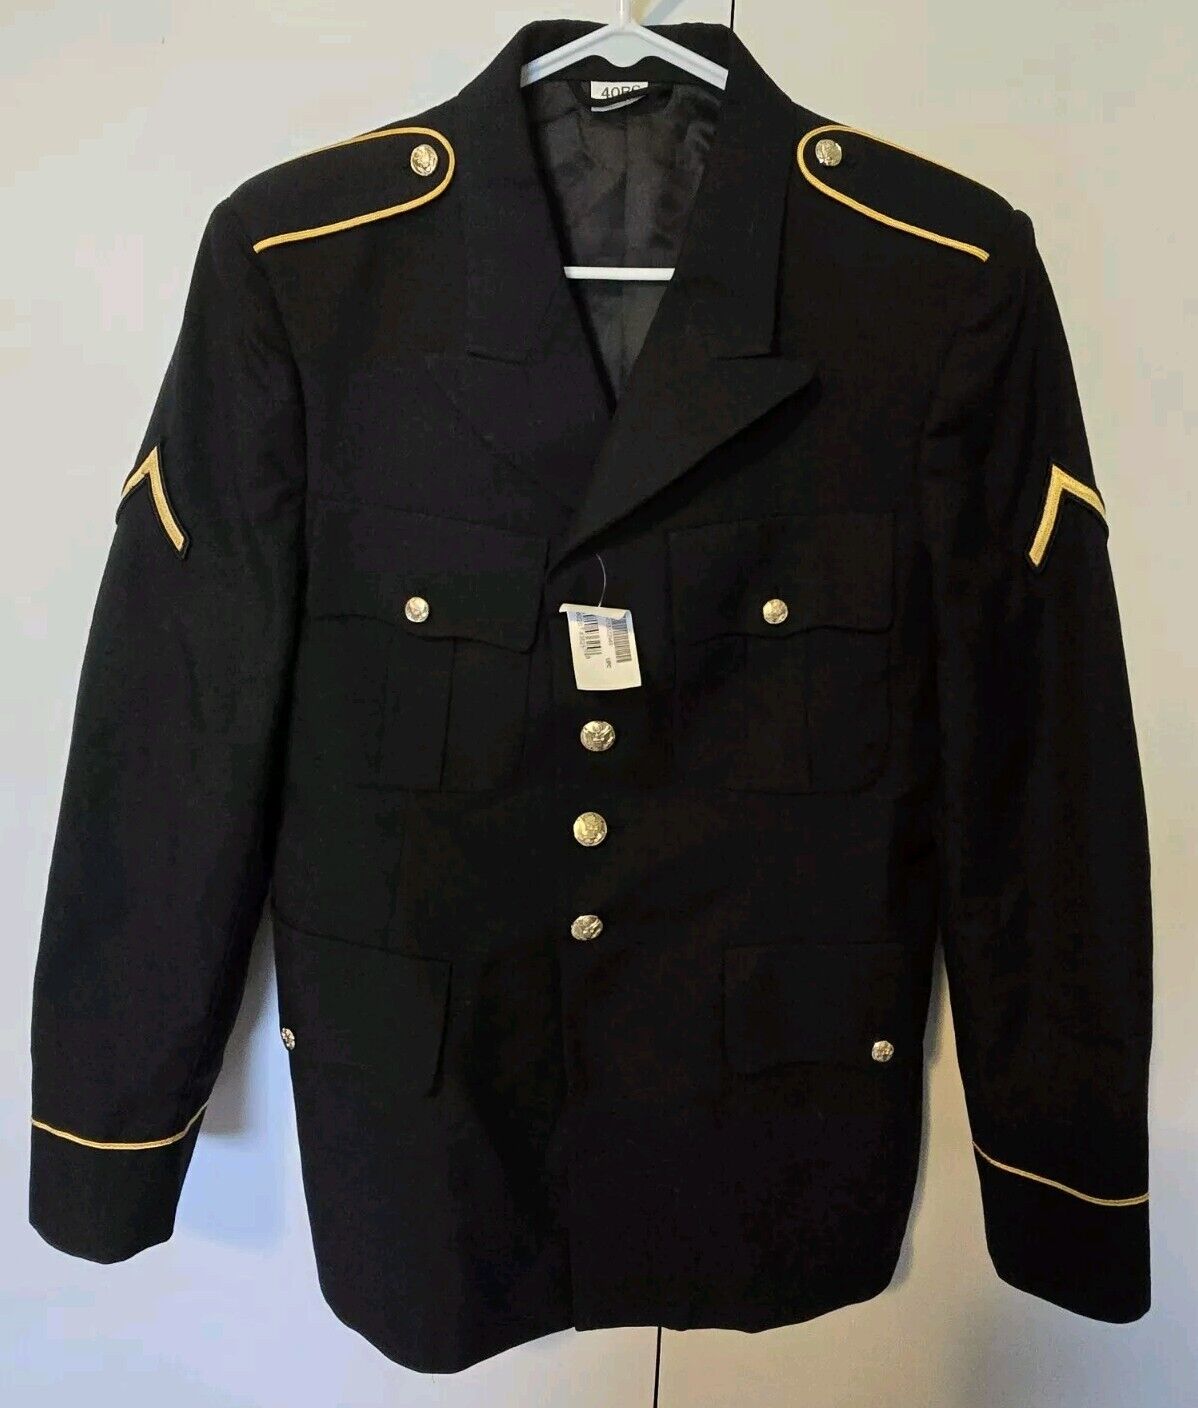 NWT ASU Army Dress Uniform Coat Jacket Size 40R PFC Rank Needs Dry Cleaned